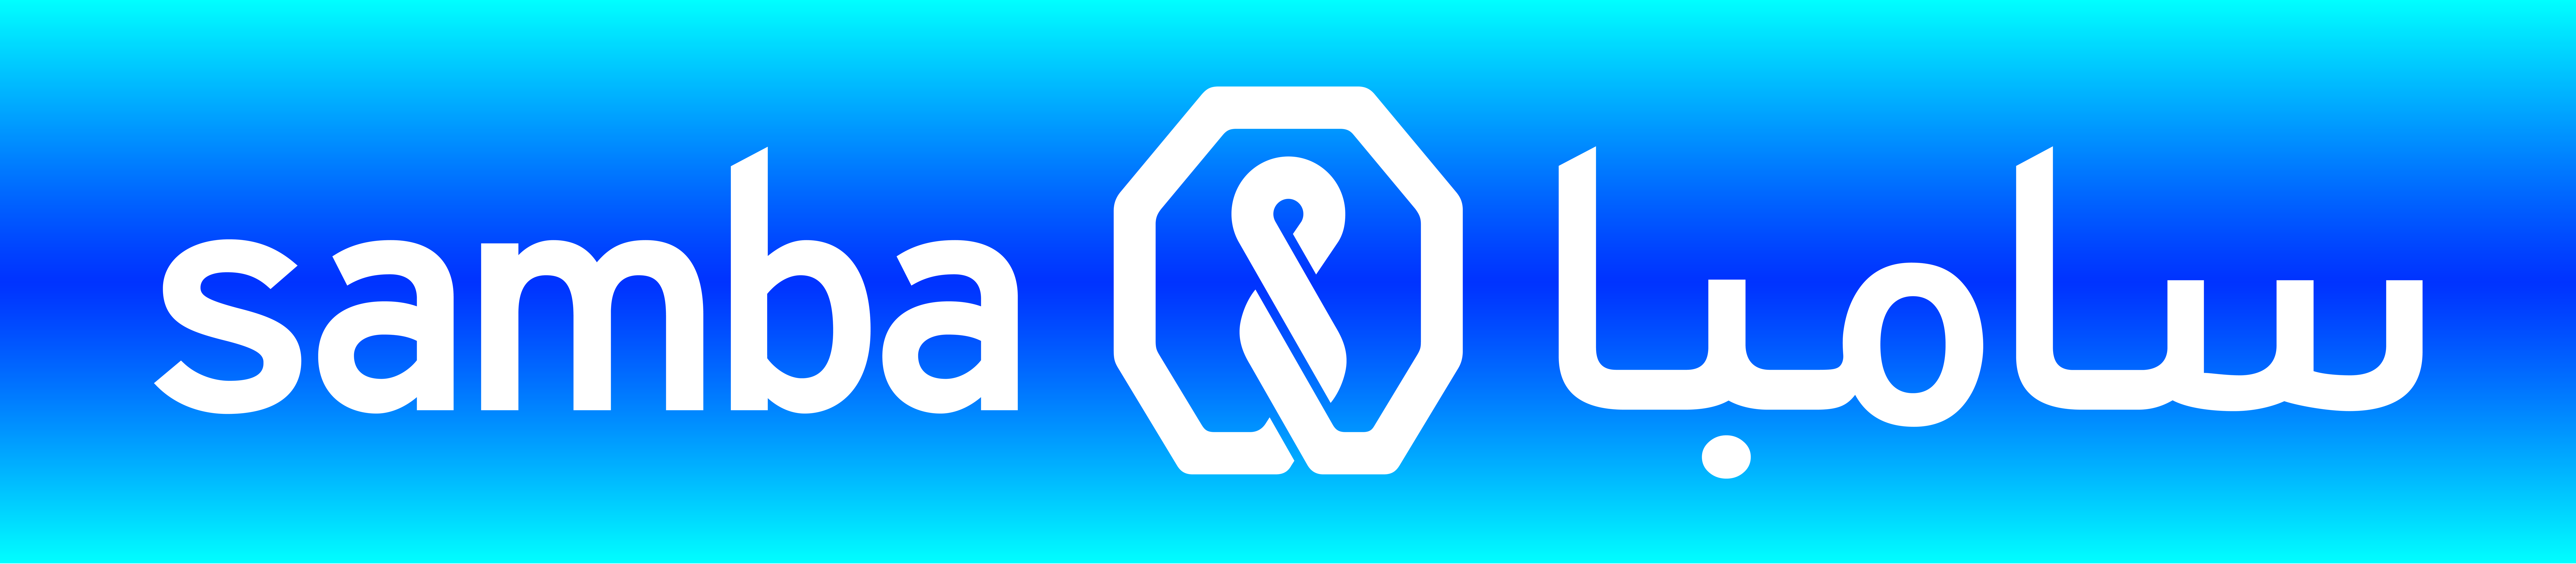 Samba_Logo_With_blue_band-01.jpg